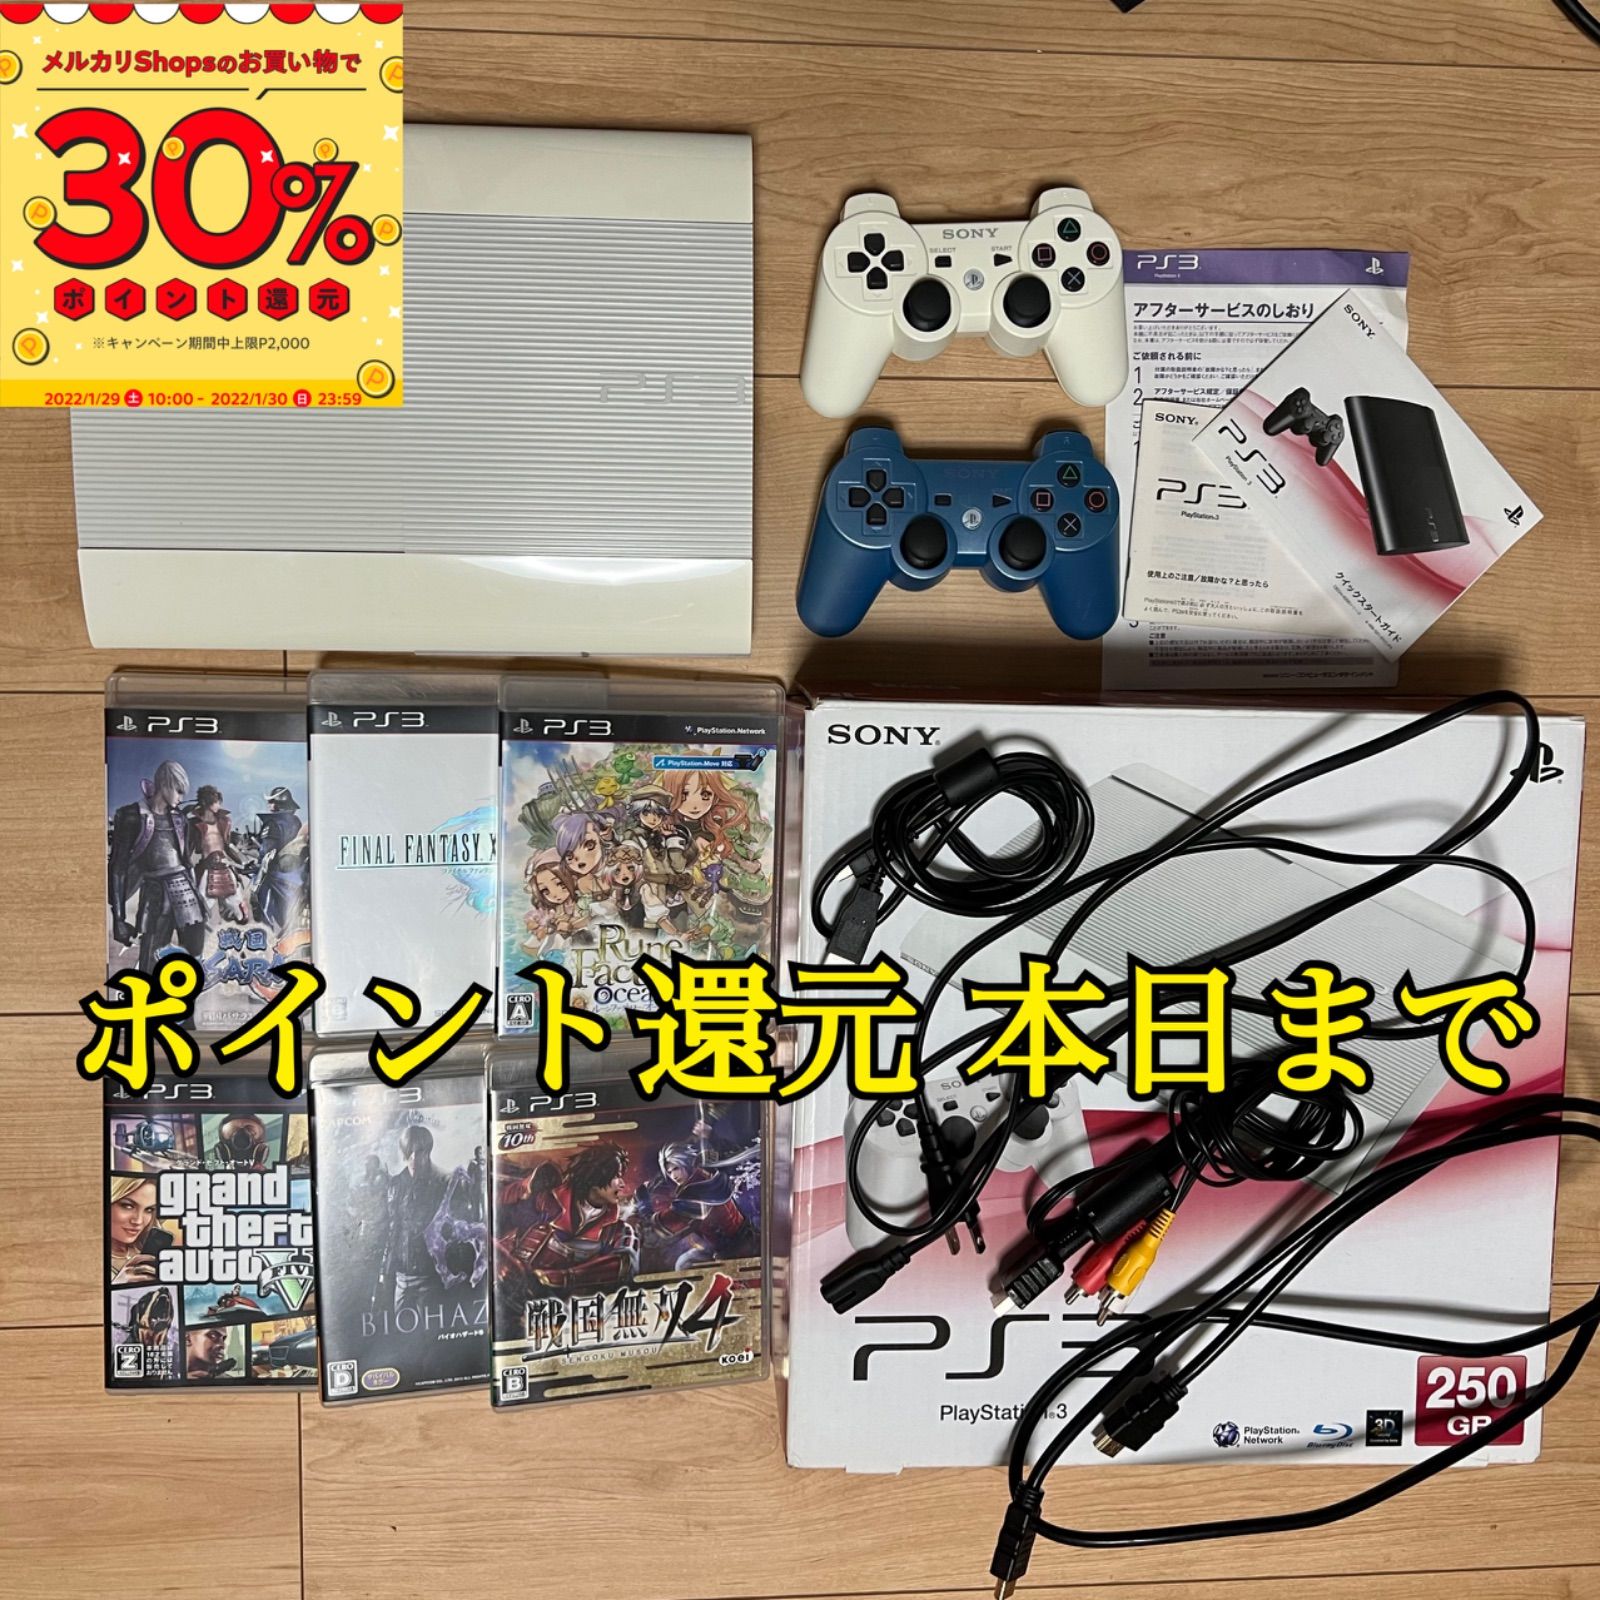 PlayStation3 本体&torne(トルネ)&ソフト 250GBPlayStation4